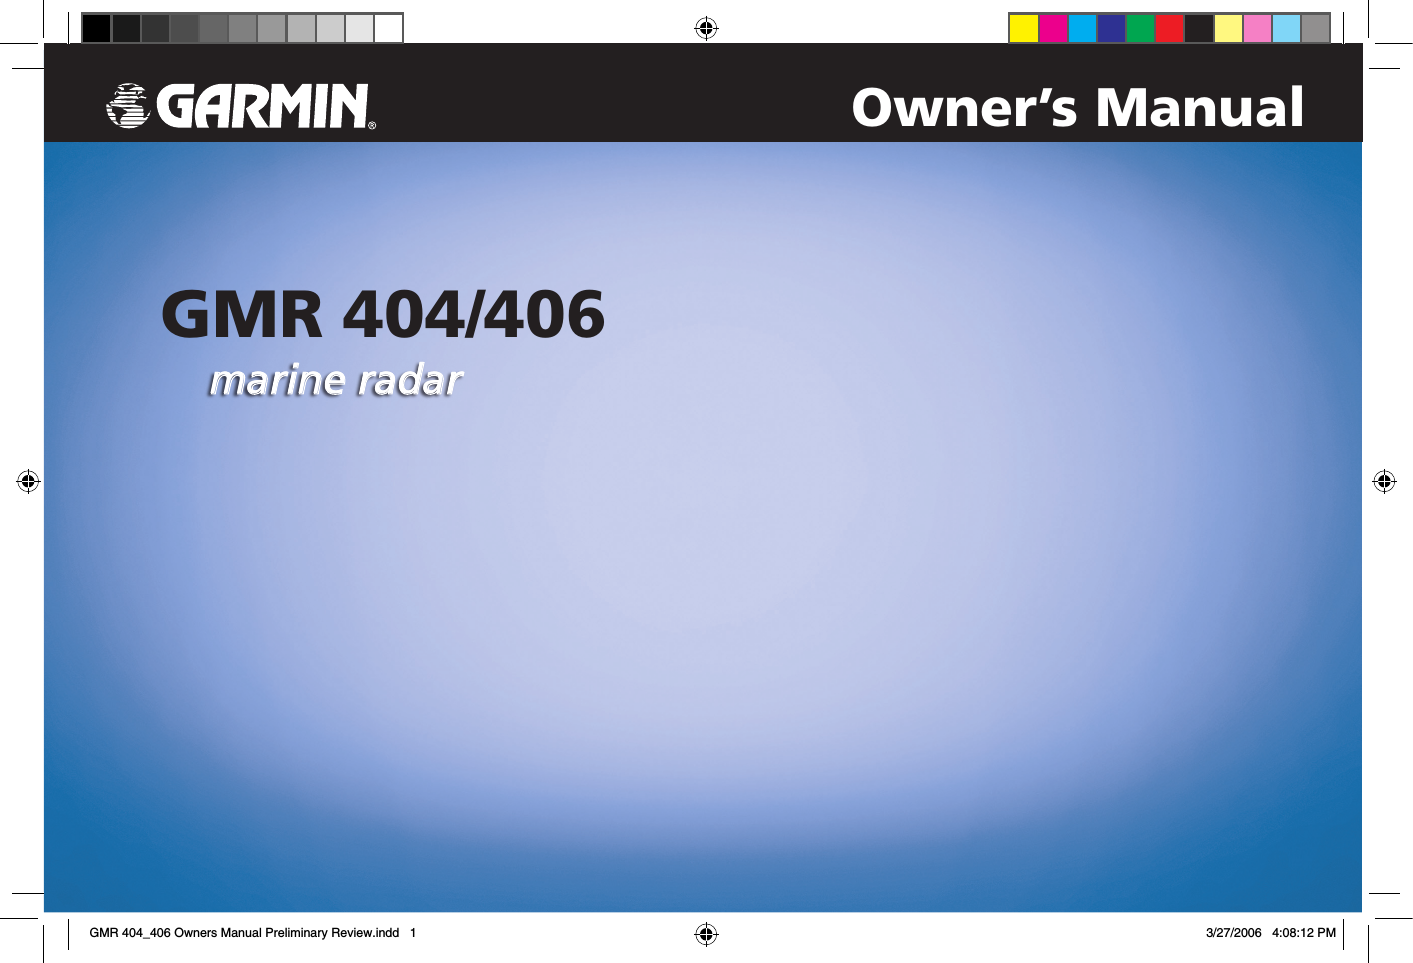 PRELIMINARYPRELIMINARYOwner’s Manualmarine radarGMR 404/406GMR 404_406 Owners Manual Preliminary Review.indd   1 3/27/2006   4:08:12 PM